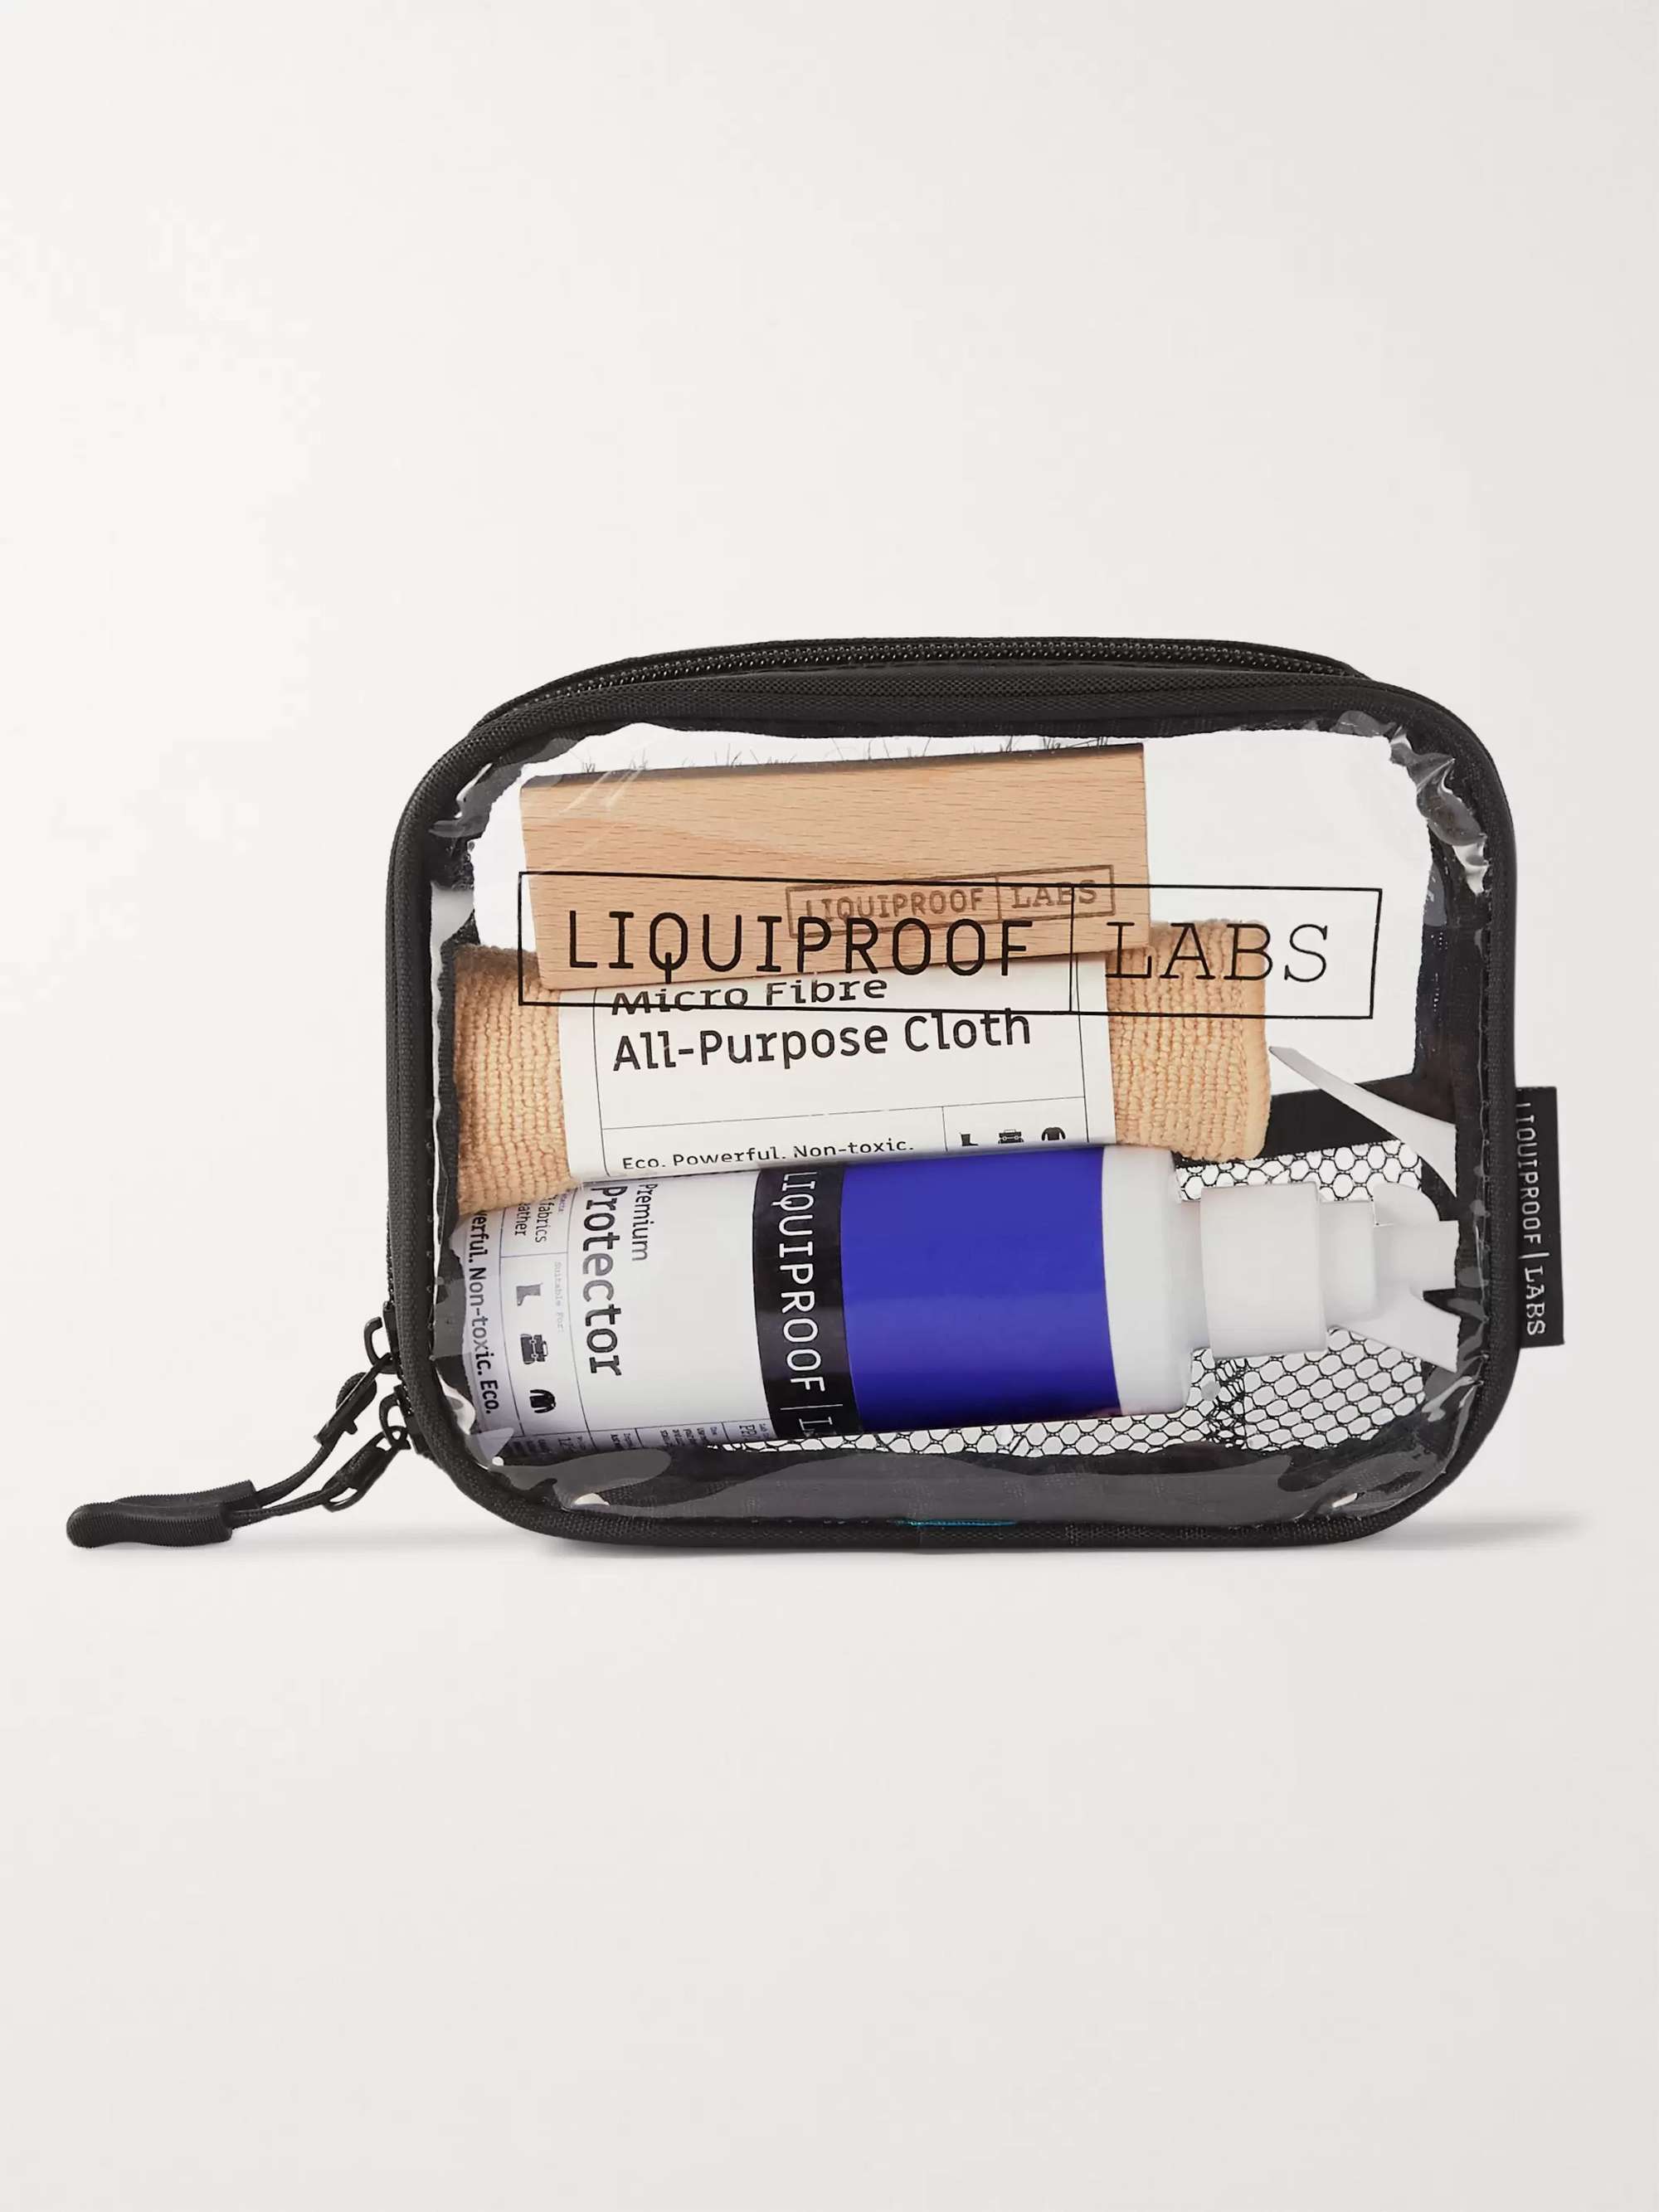 LIQUIPROOF LABS Protector Kit 125 + Travel Bag